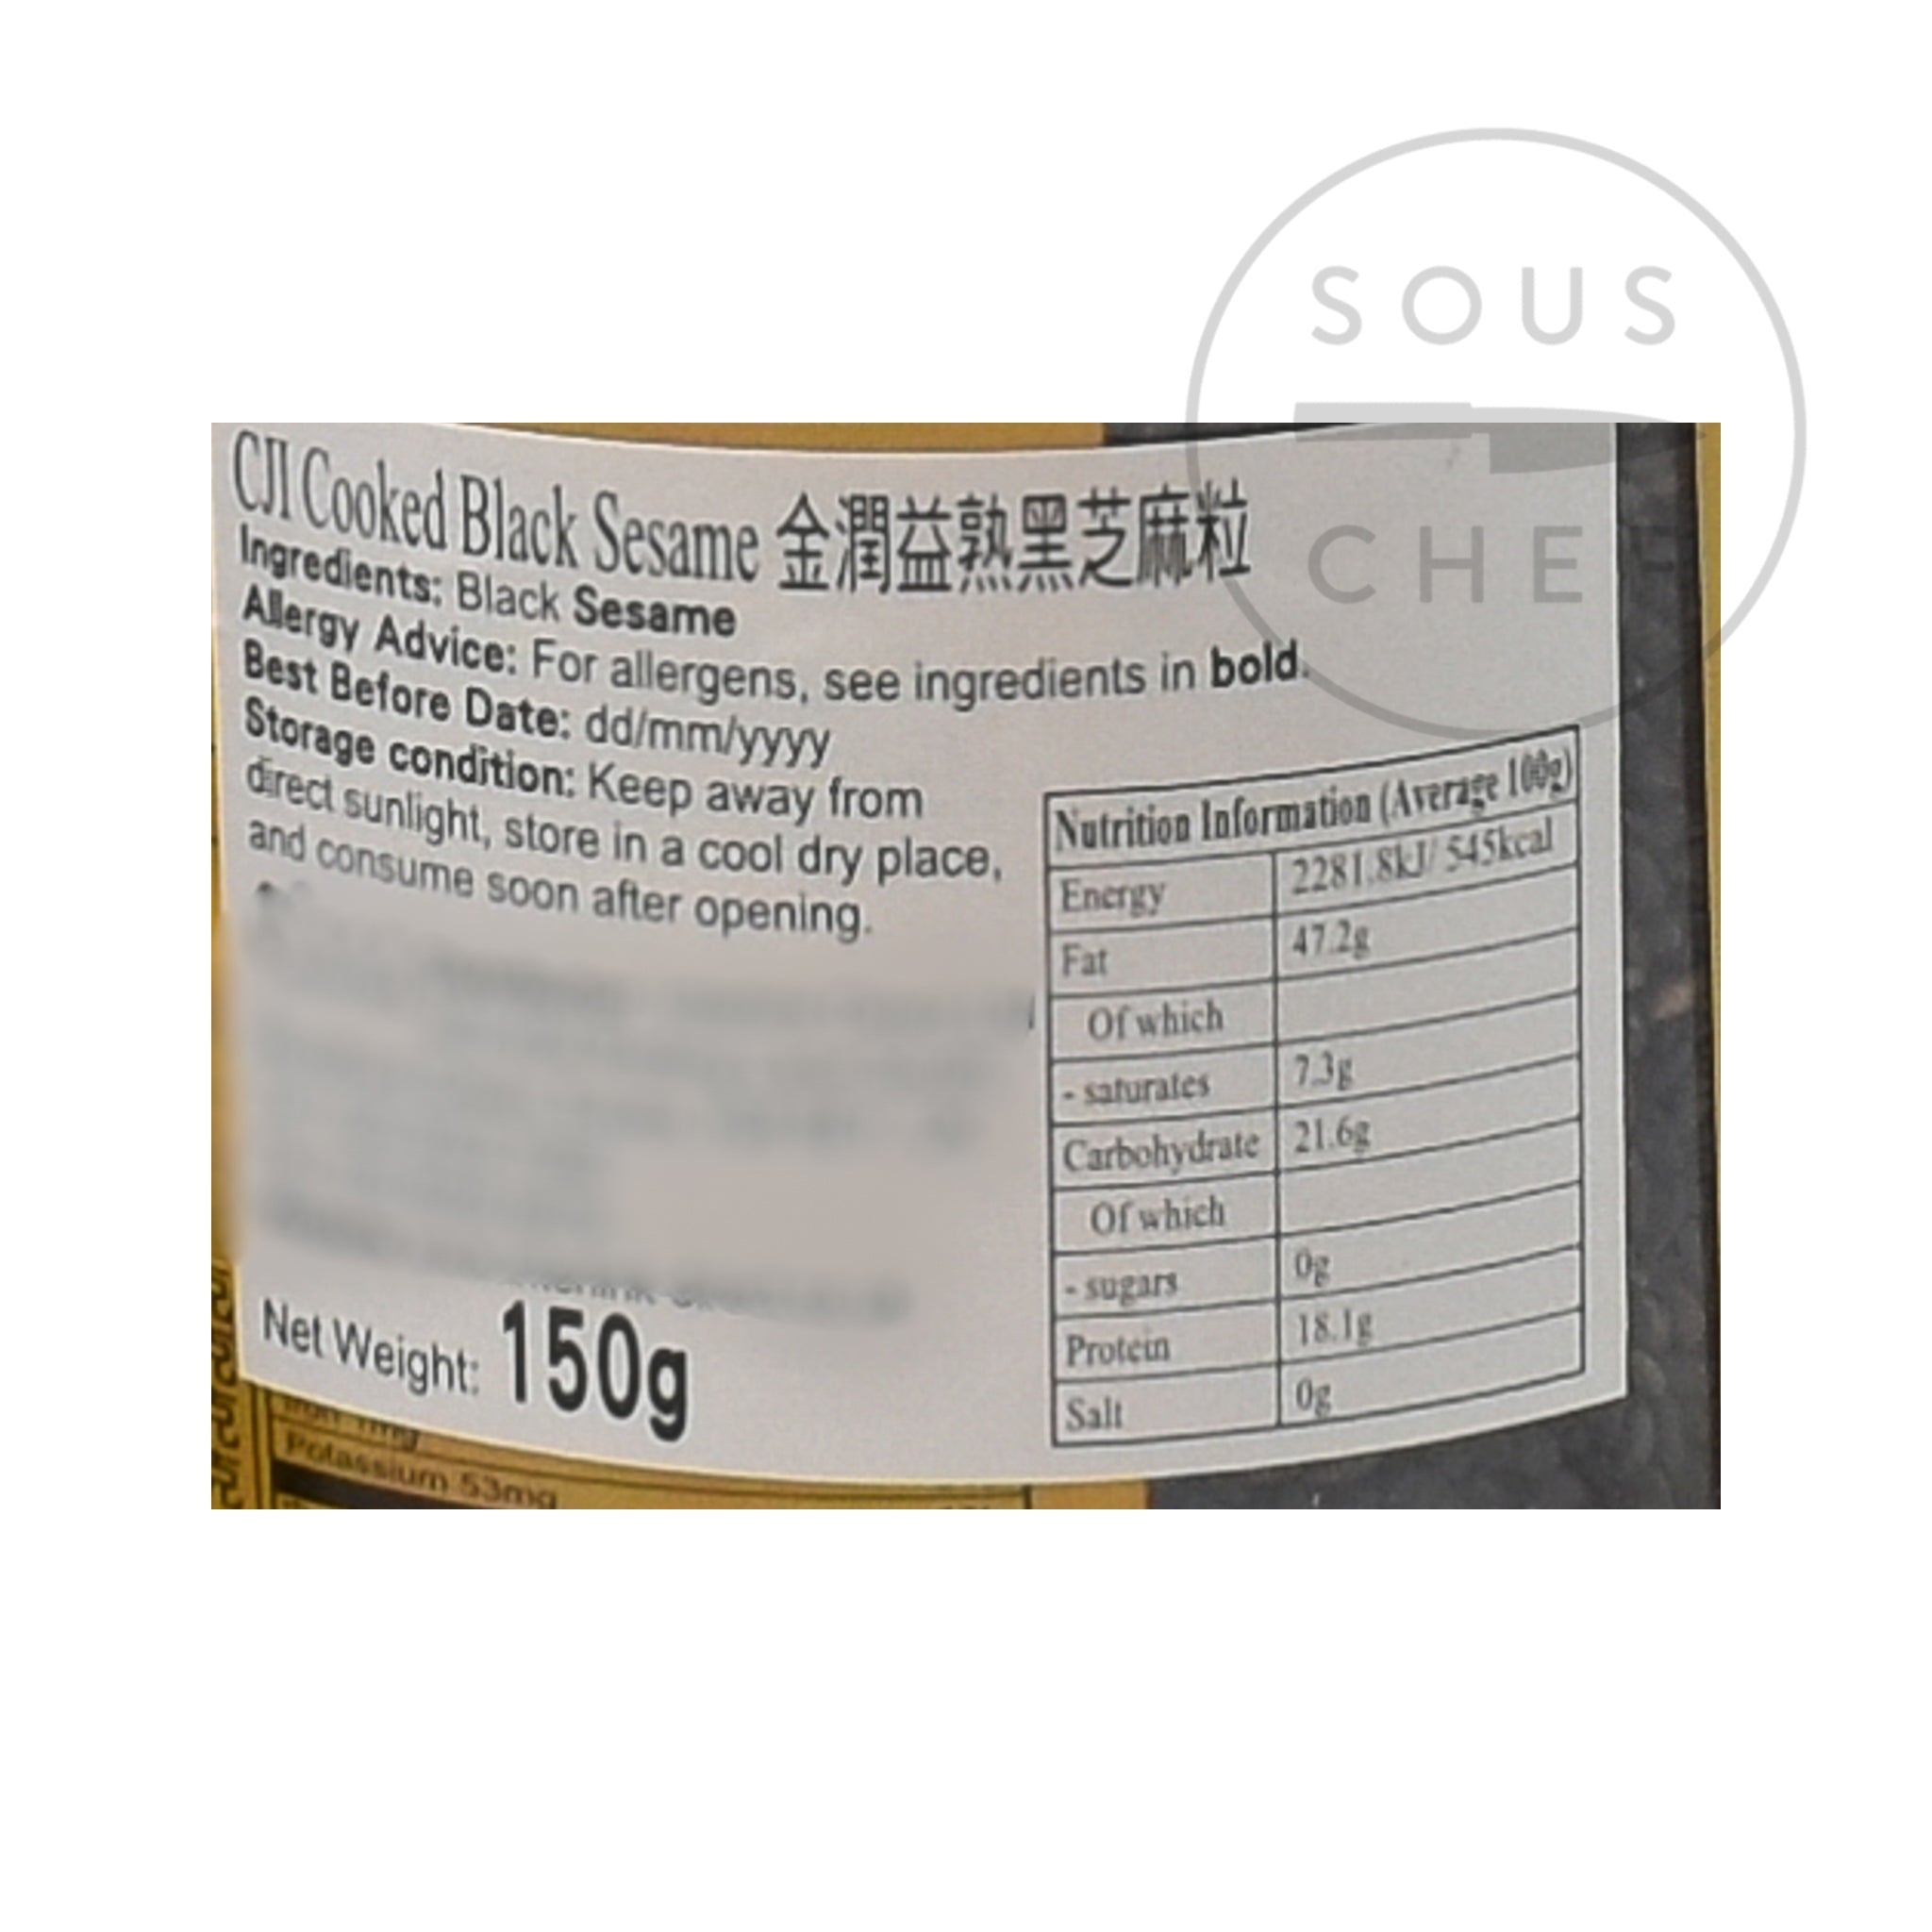 Toasted Black Sesame Seeds 150g nutritional information ingredients